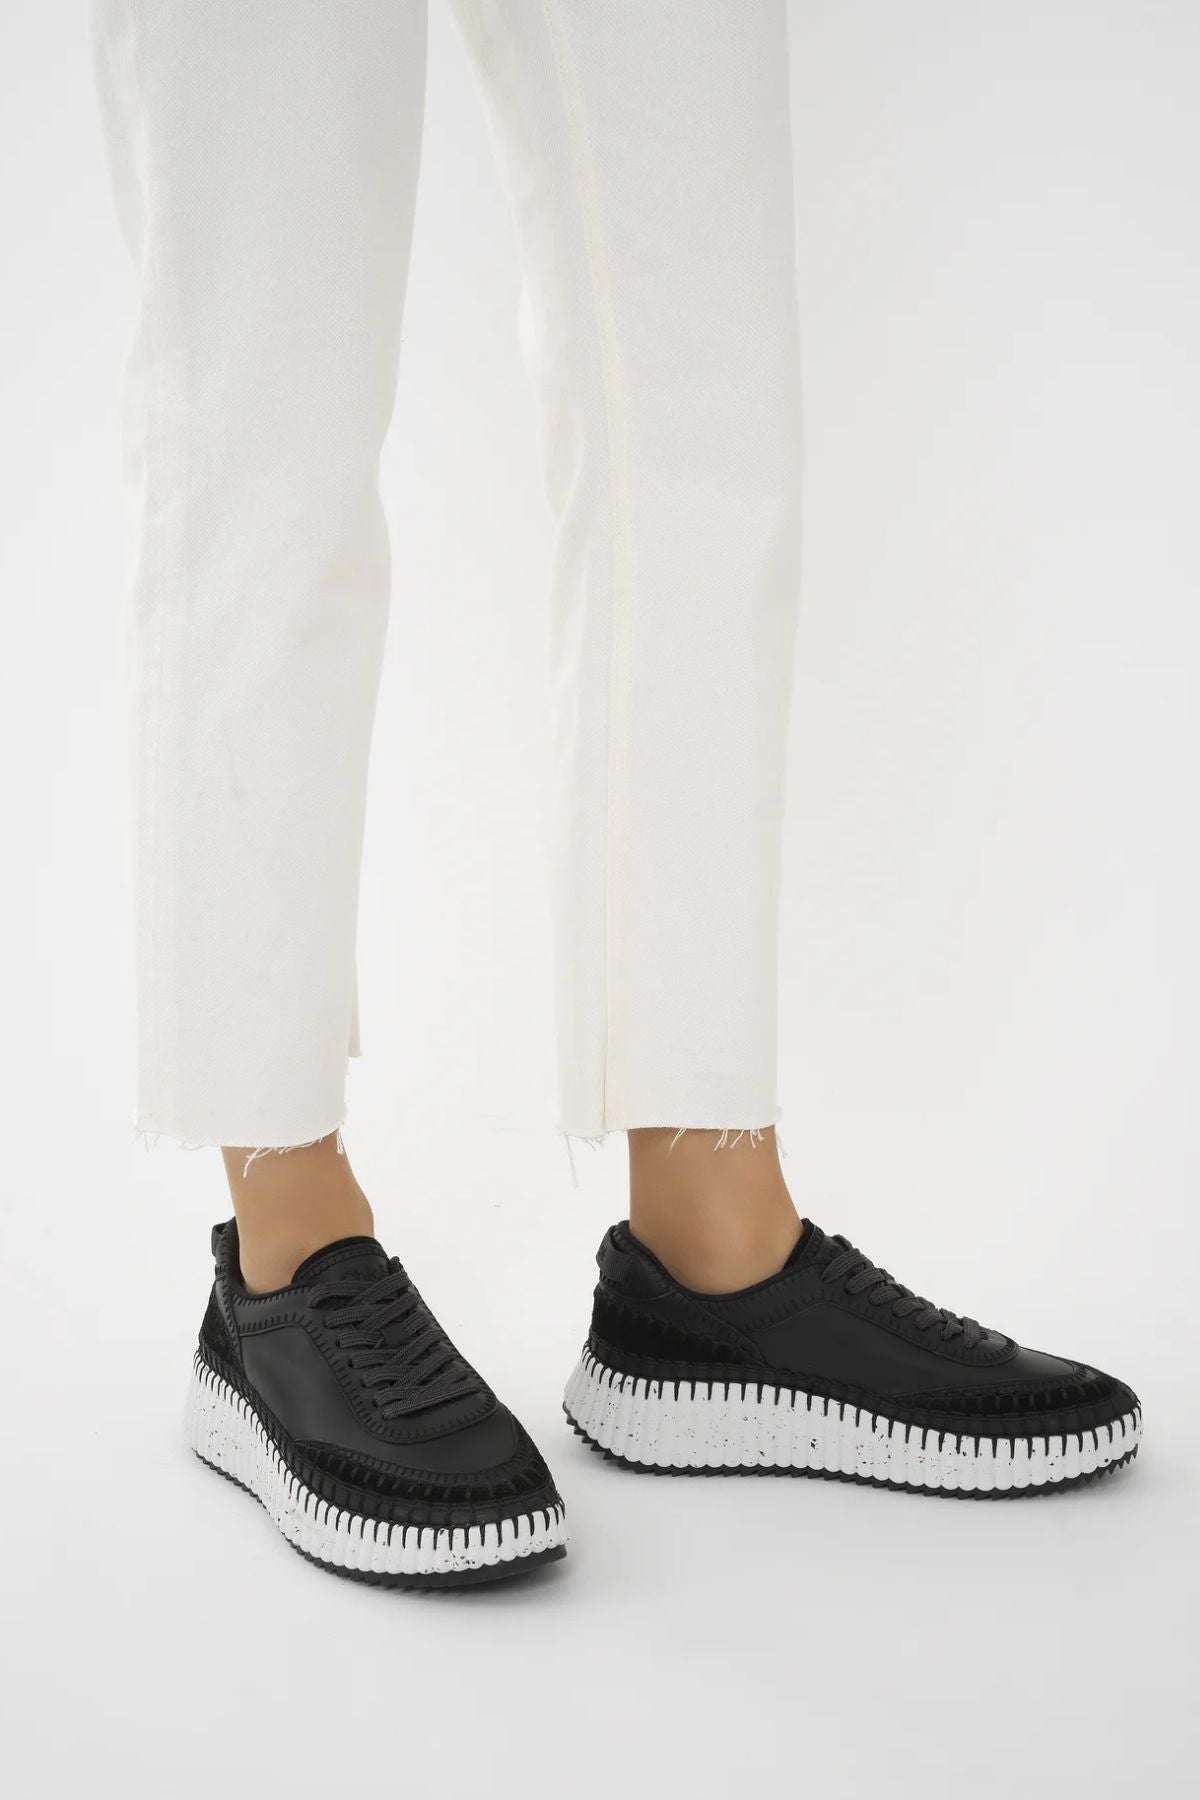 Chloé Leather Combo Nama Sneaker - Black